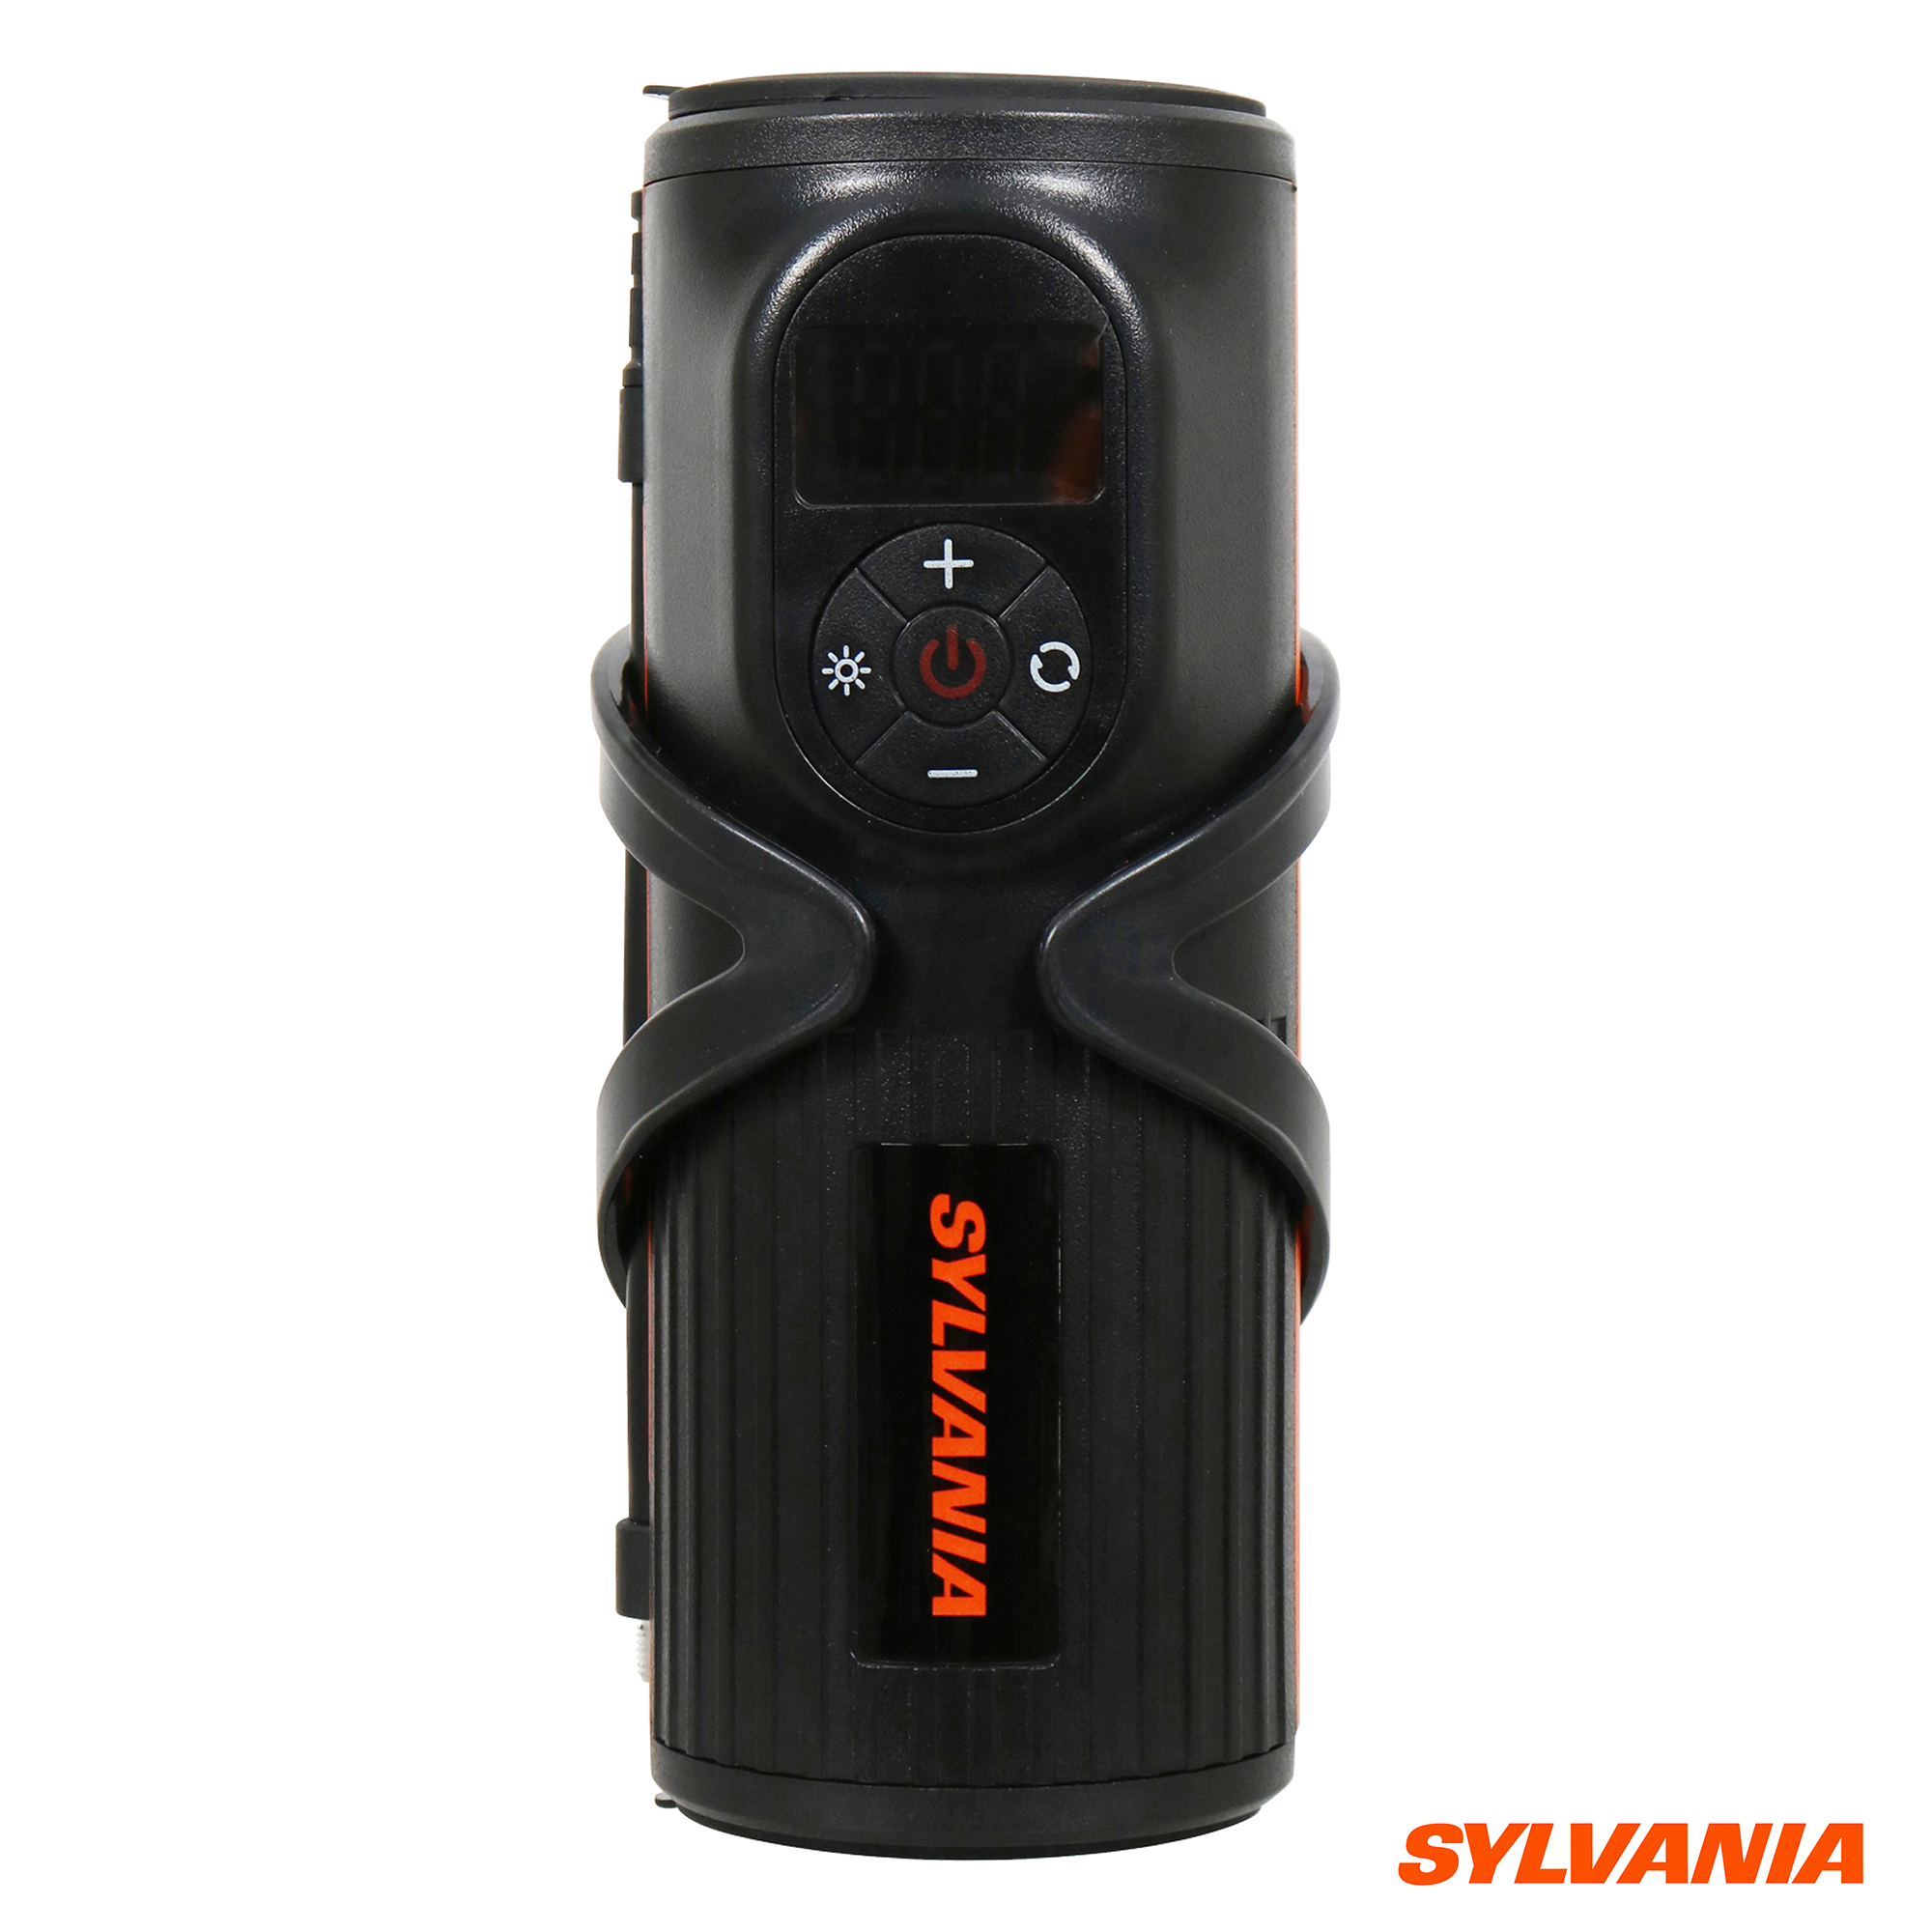 Sylvania Rapid Portable Tire Inflator - Large Led Digital Display